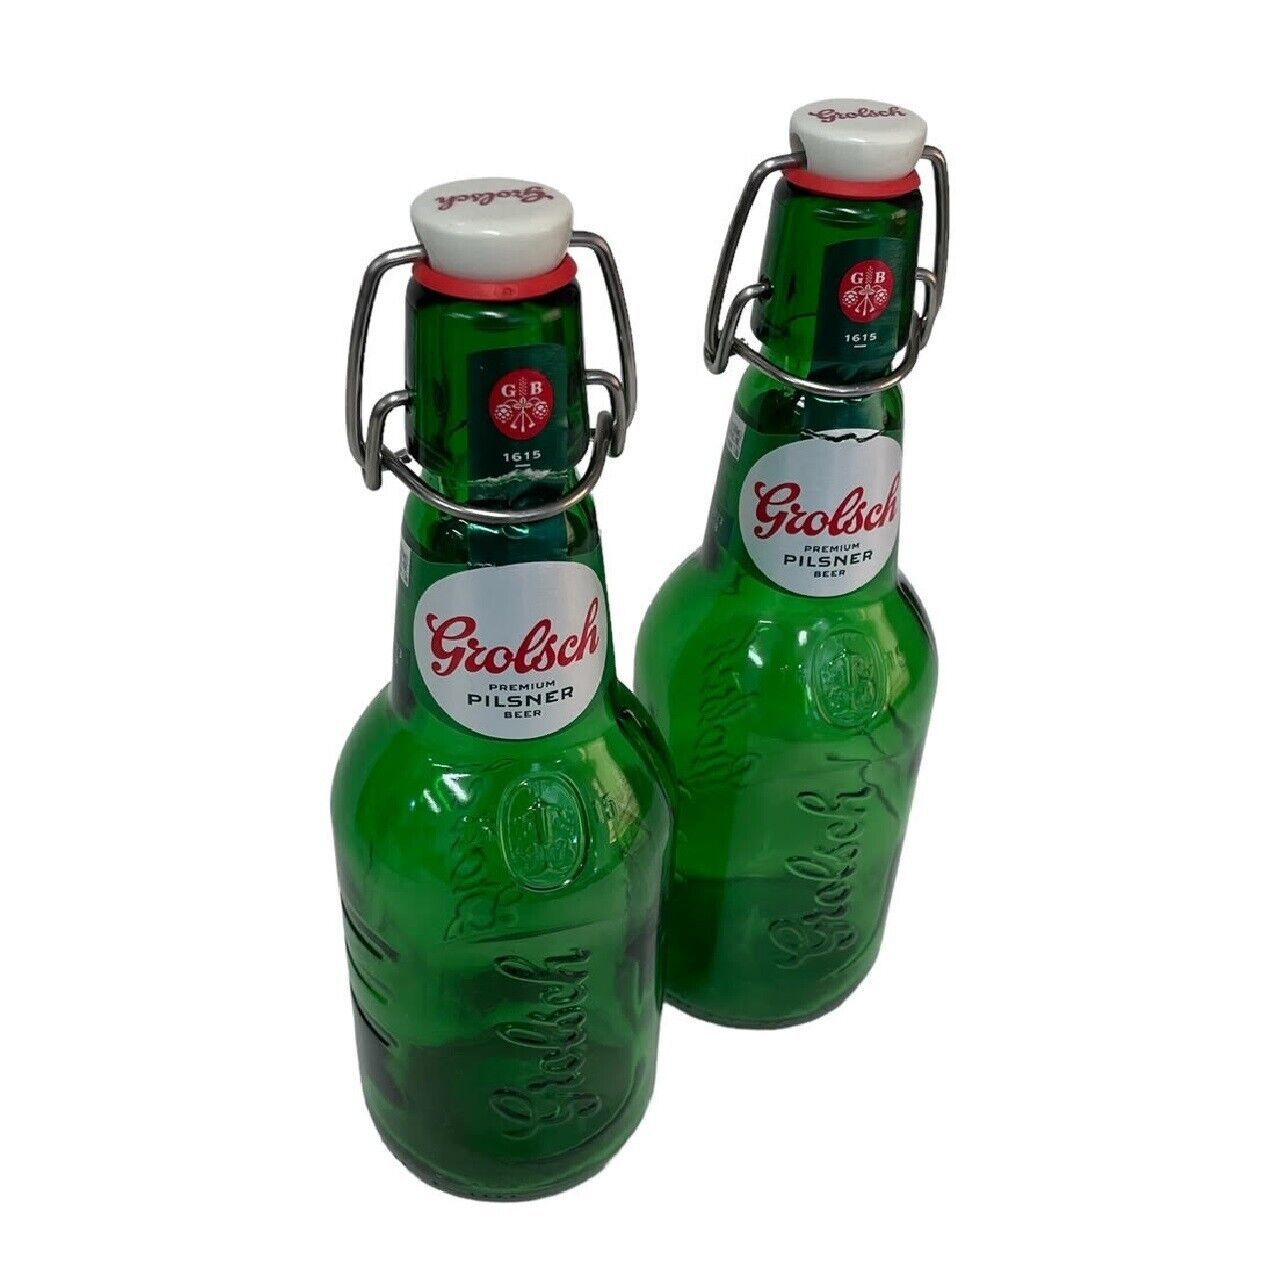 Grolsch Beer Bottles 15.2 Oz Swing Top Lids Great For Home Brewers Lot Of 2 Nice - $15.68